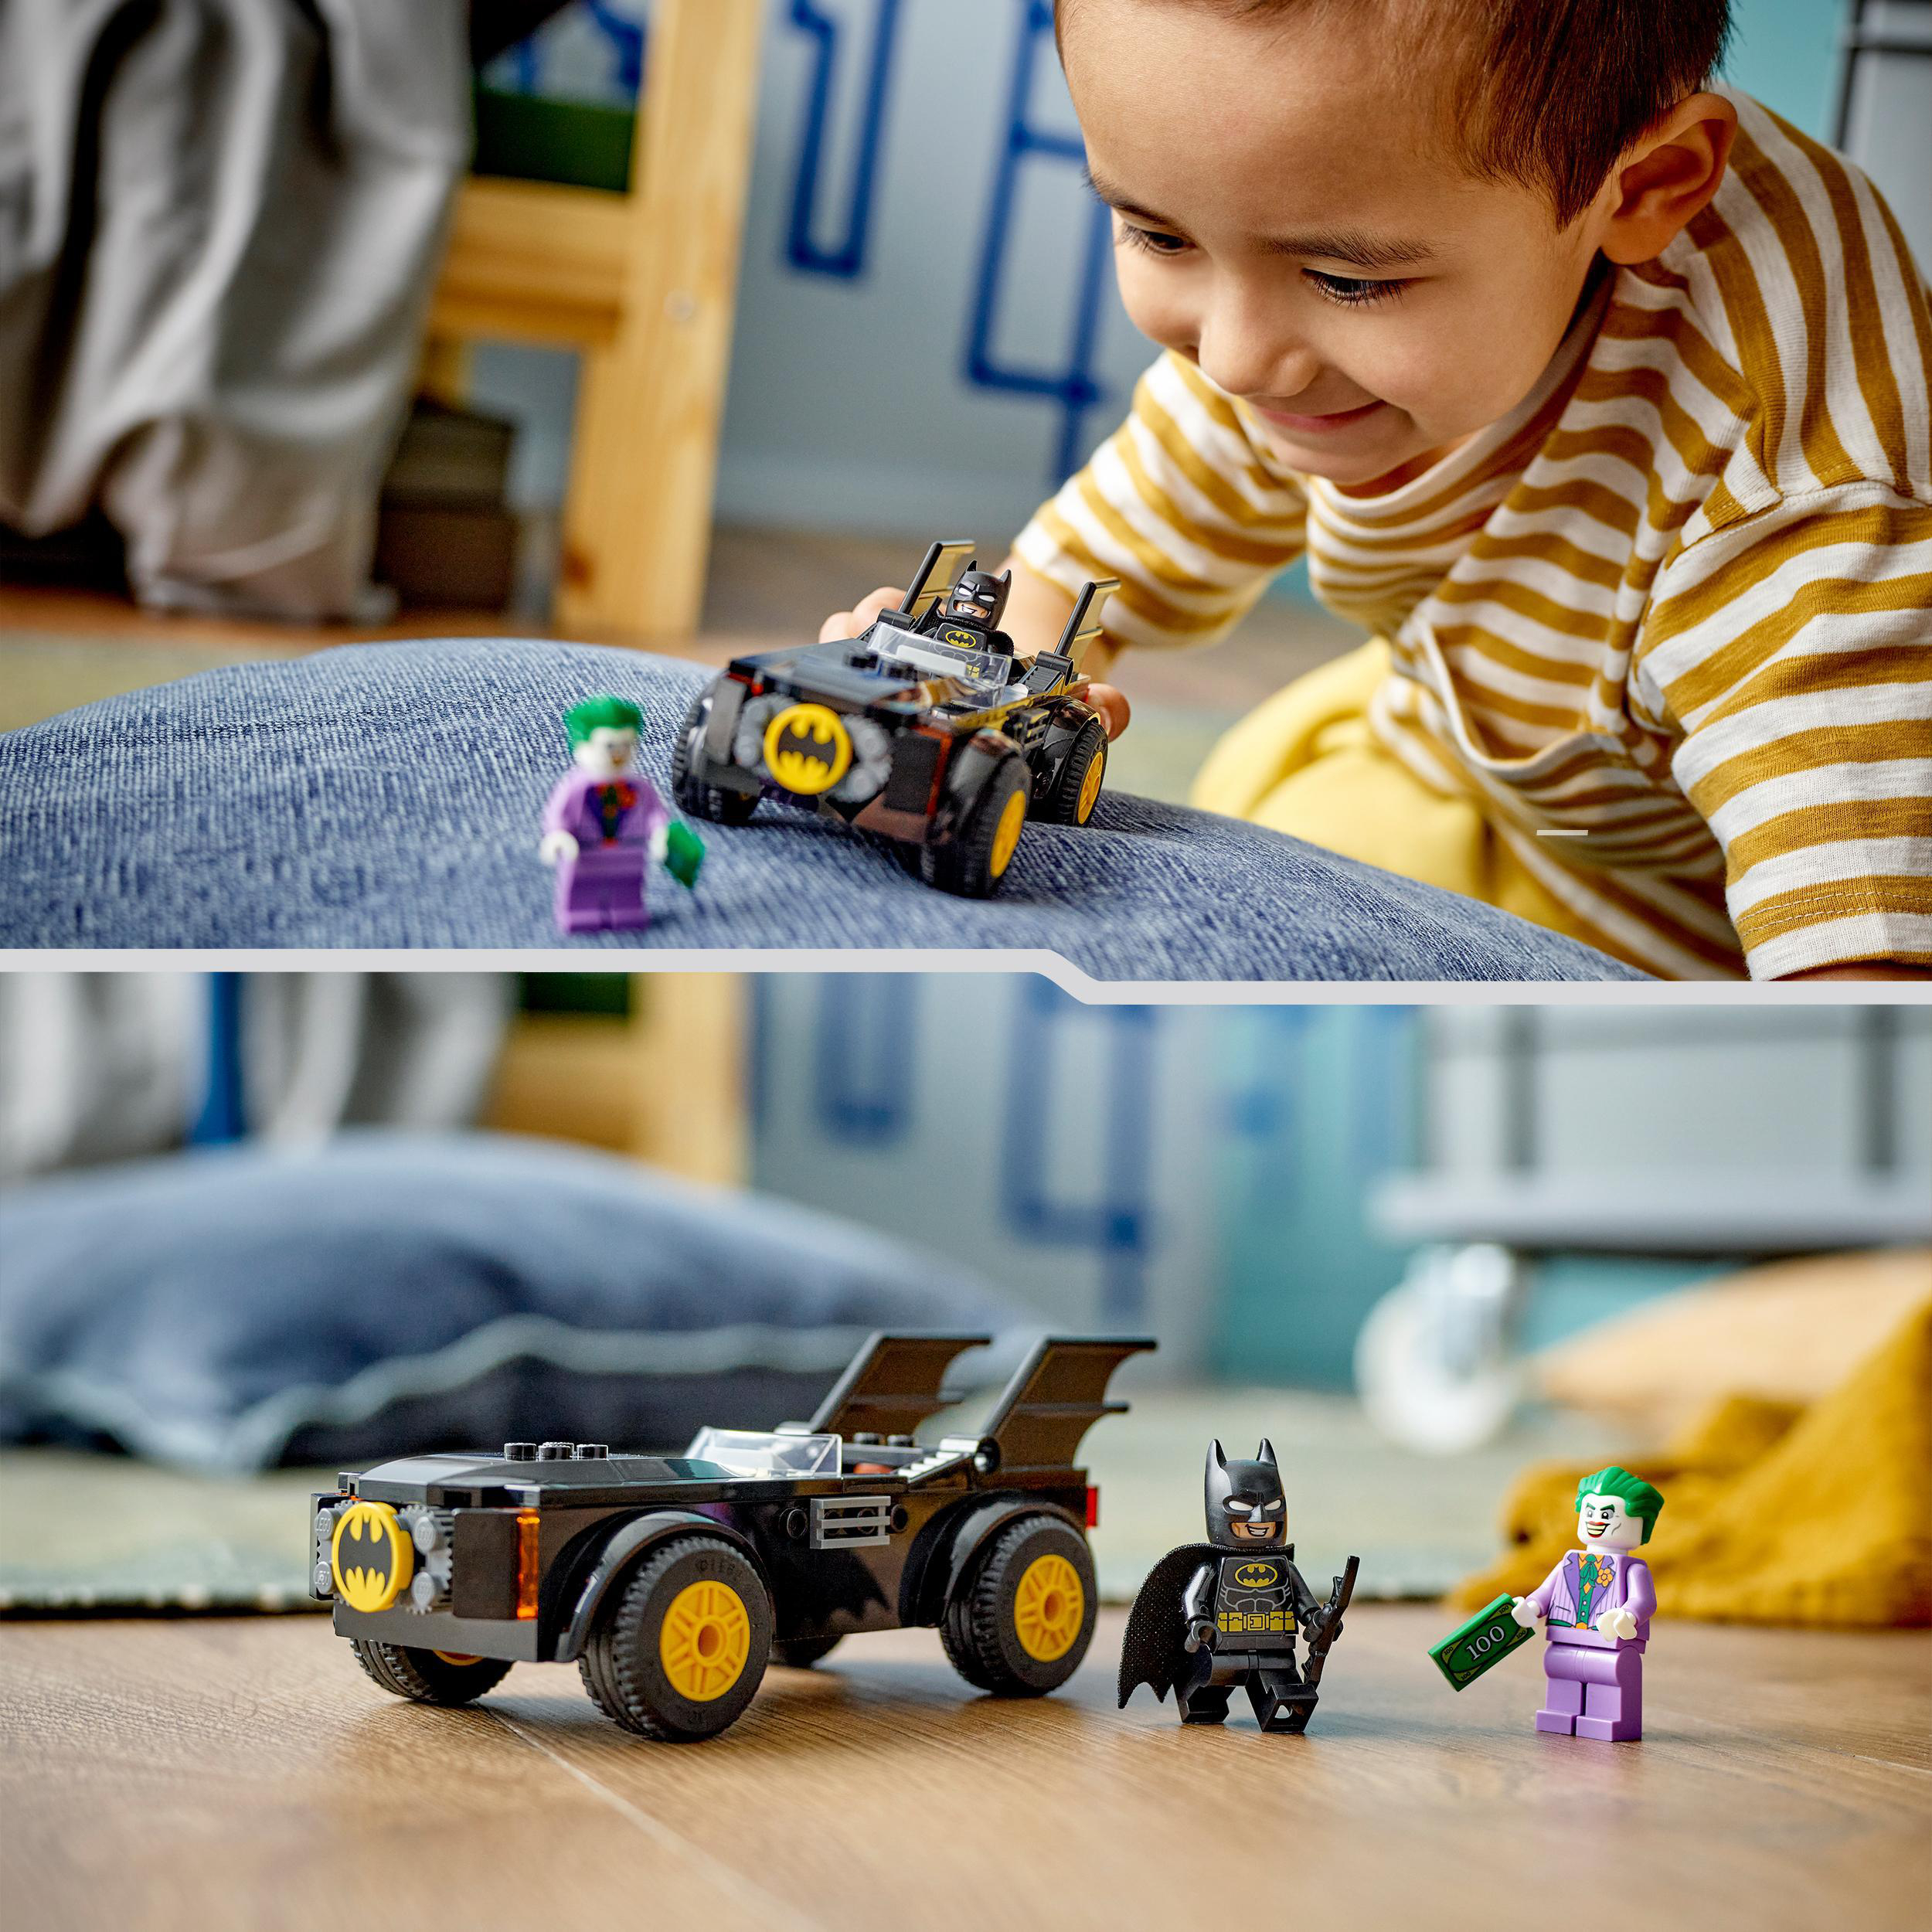 Batmobile: Mehrfarbig Joker Verfolgungsjagd Bausatz, Batman im vs. DC 76264 LEGO